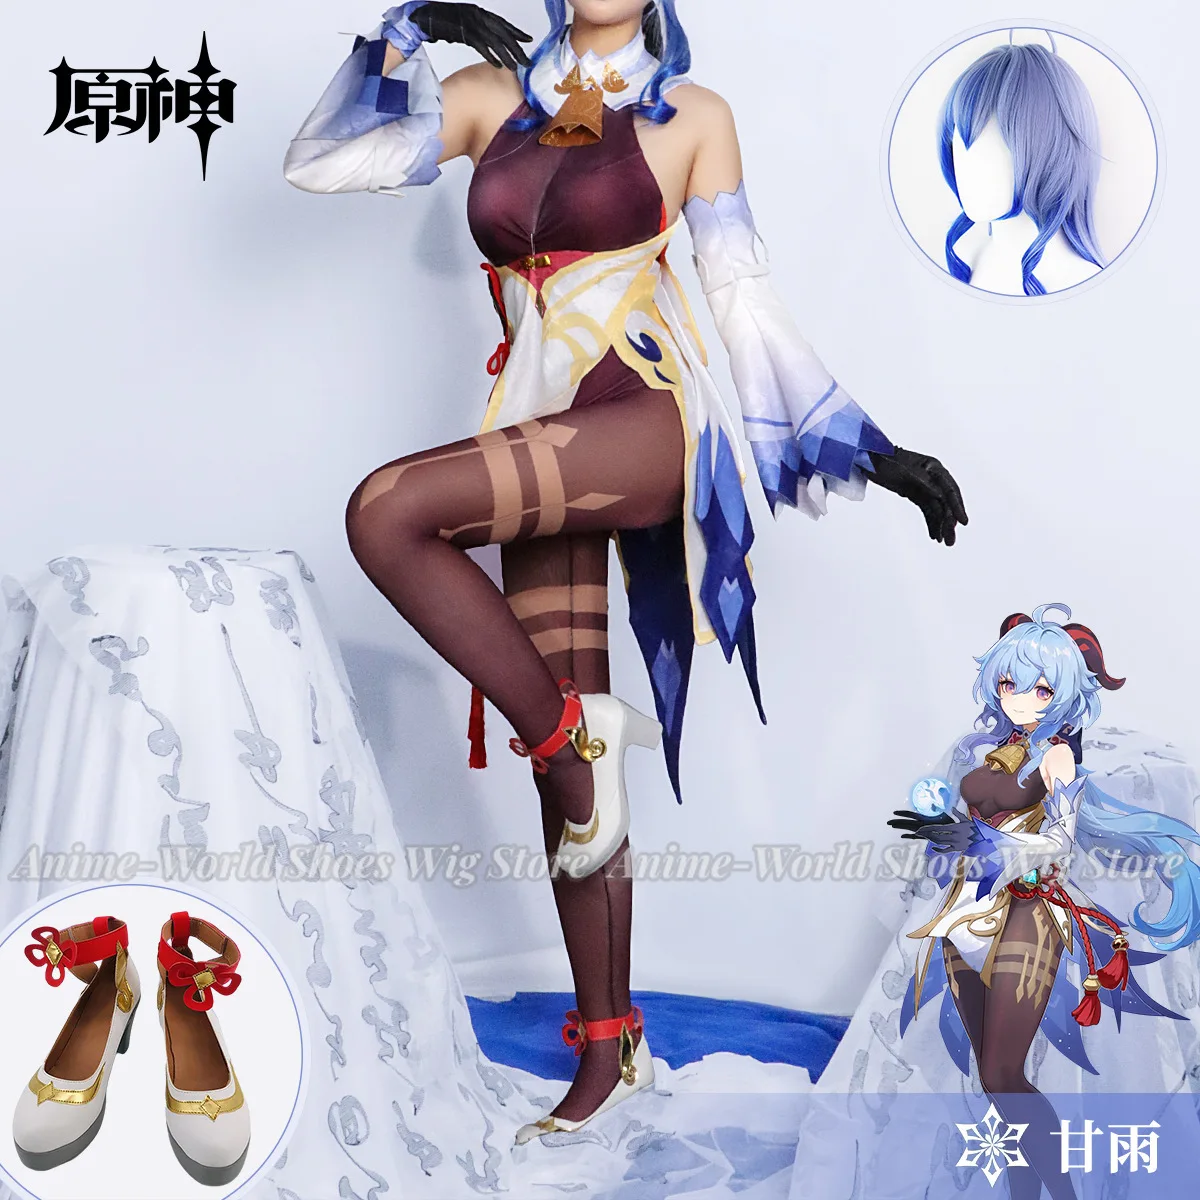 

Anime Game Genshin Impact Ganyu Gan Yu Cosplay Costume Wig Horn Liyue Sexy Woman Jumpsuit Halloween Carnival Party Suit